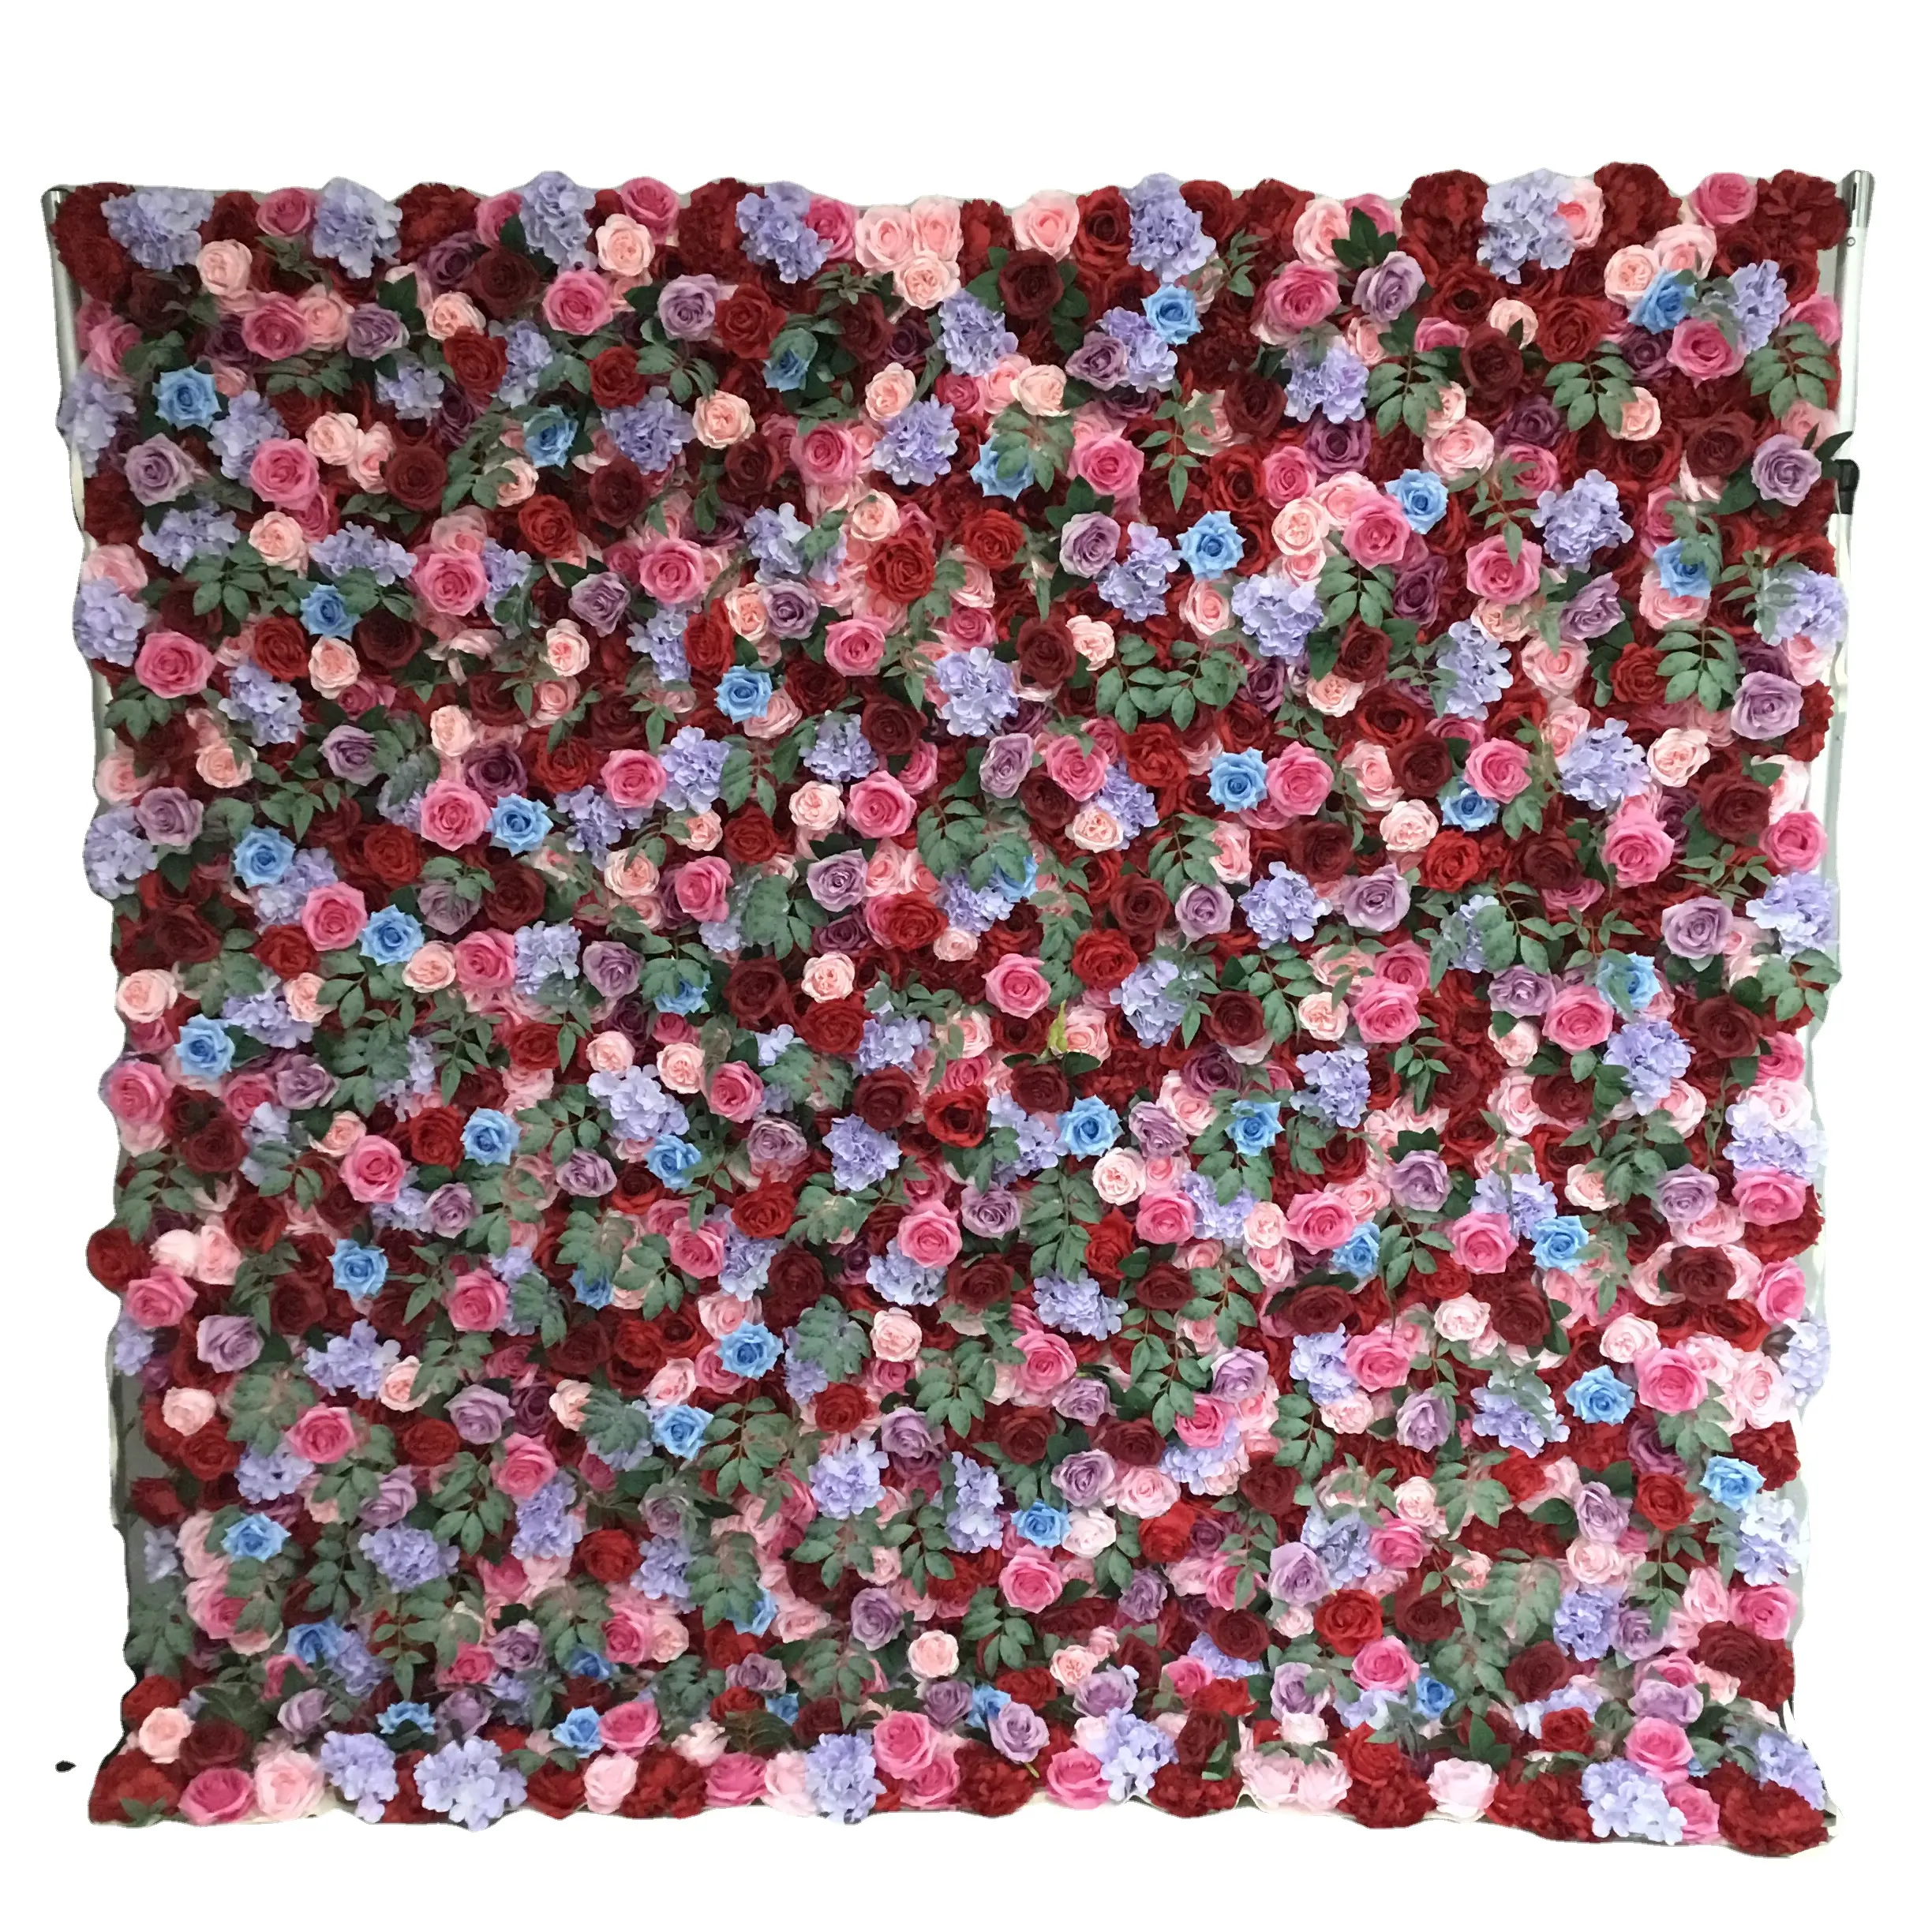 Fondo de pared de flores artificiales de 8x8 pies para flores artificiales de seda